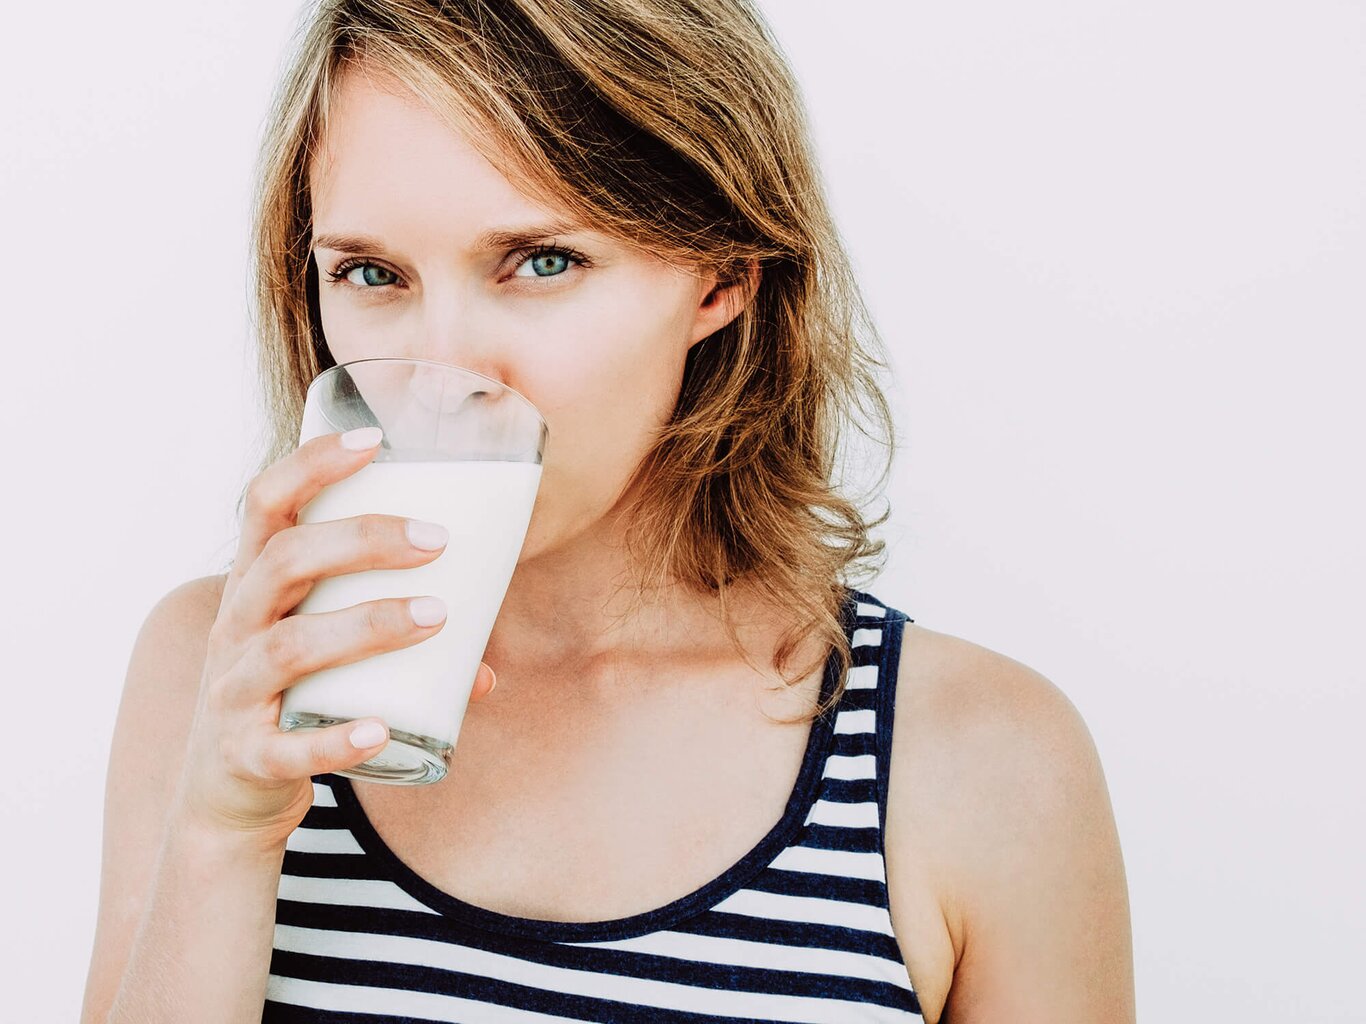 Пить молоко при изжоге. Молоко женщины. Пьет молоко. Женщина пьет молоко. Женщина со стаканом молока.